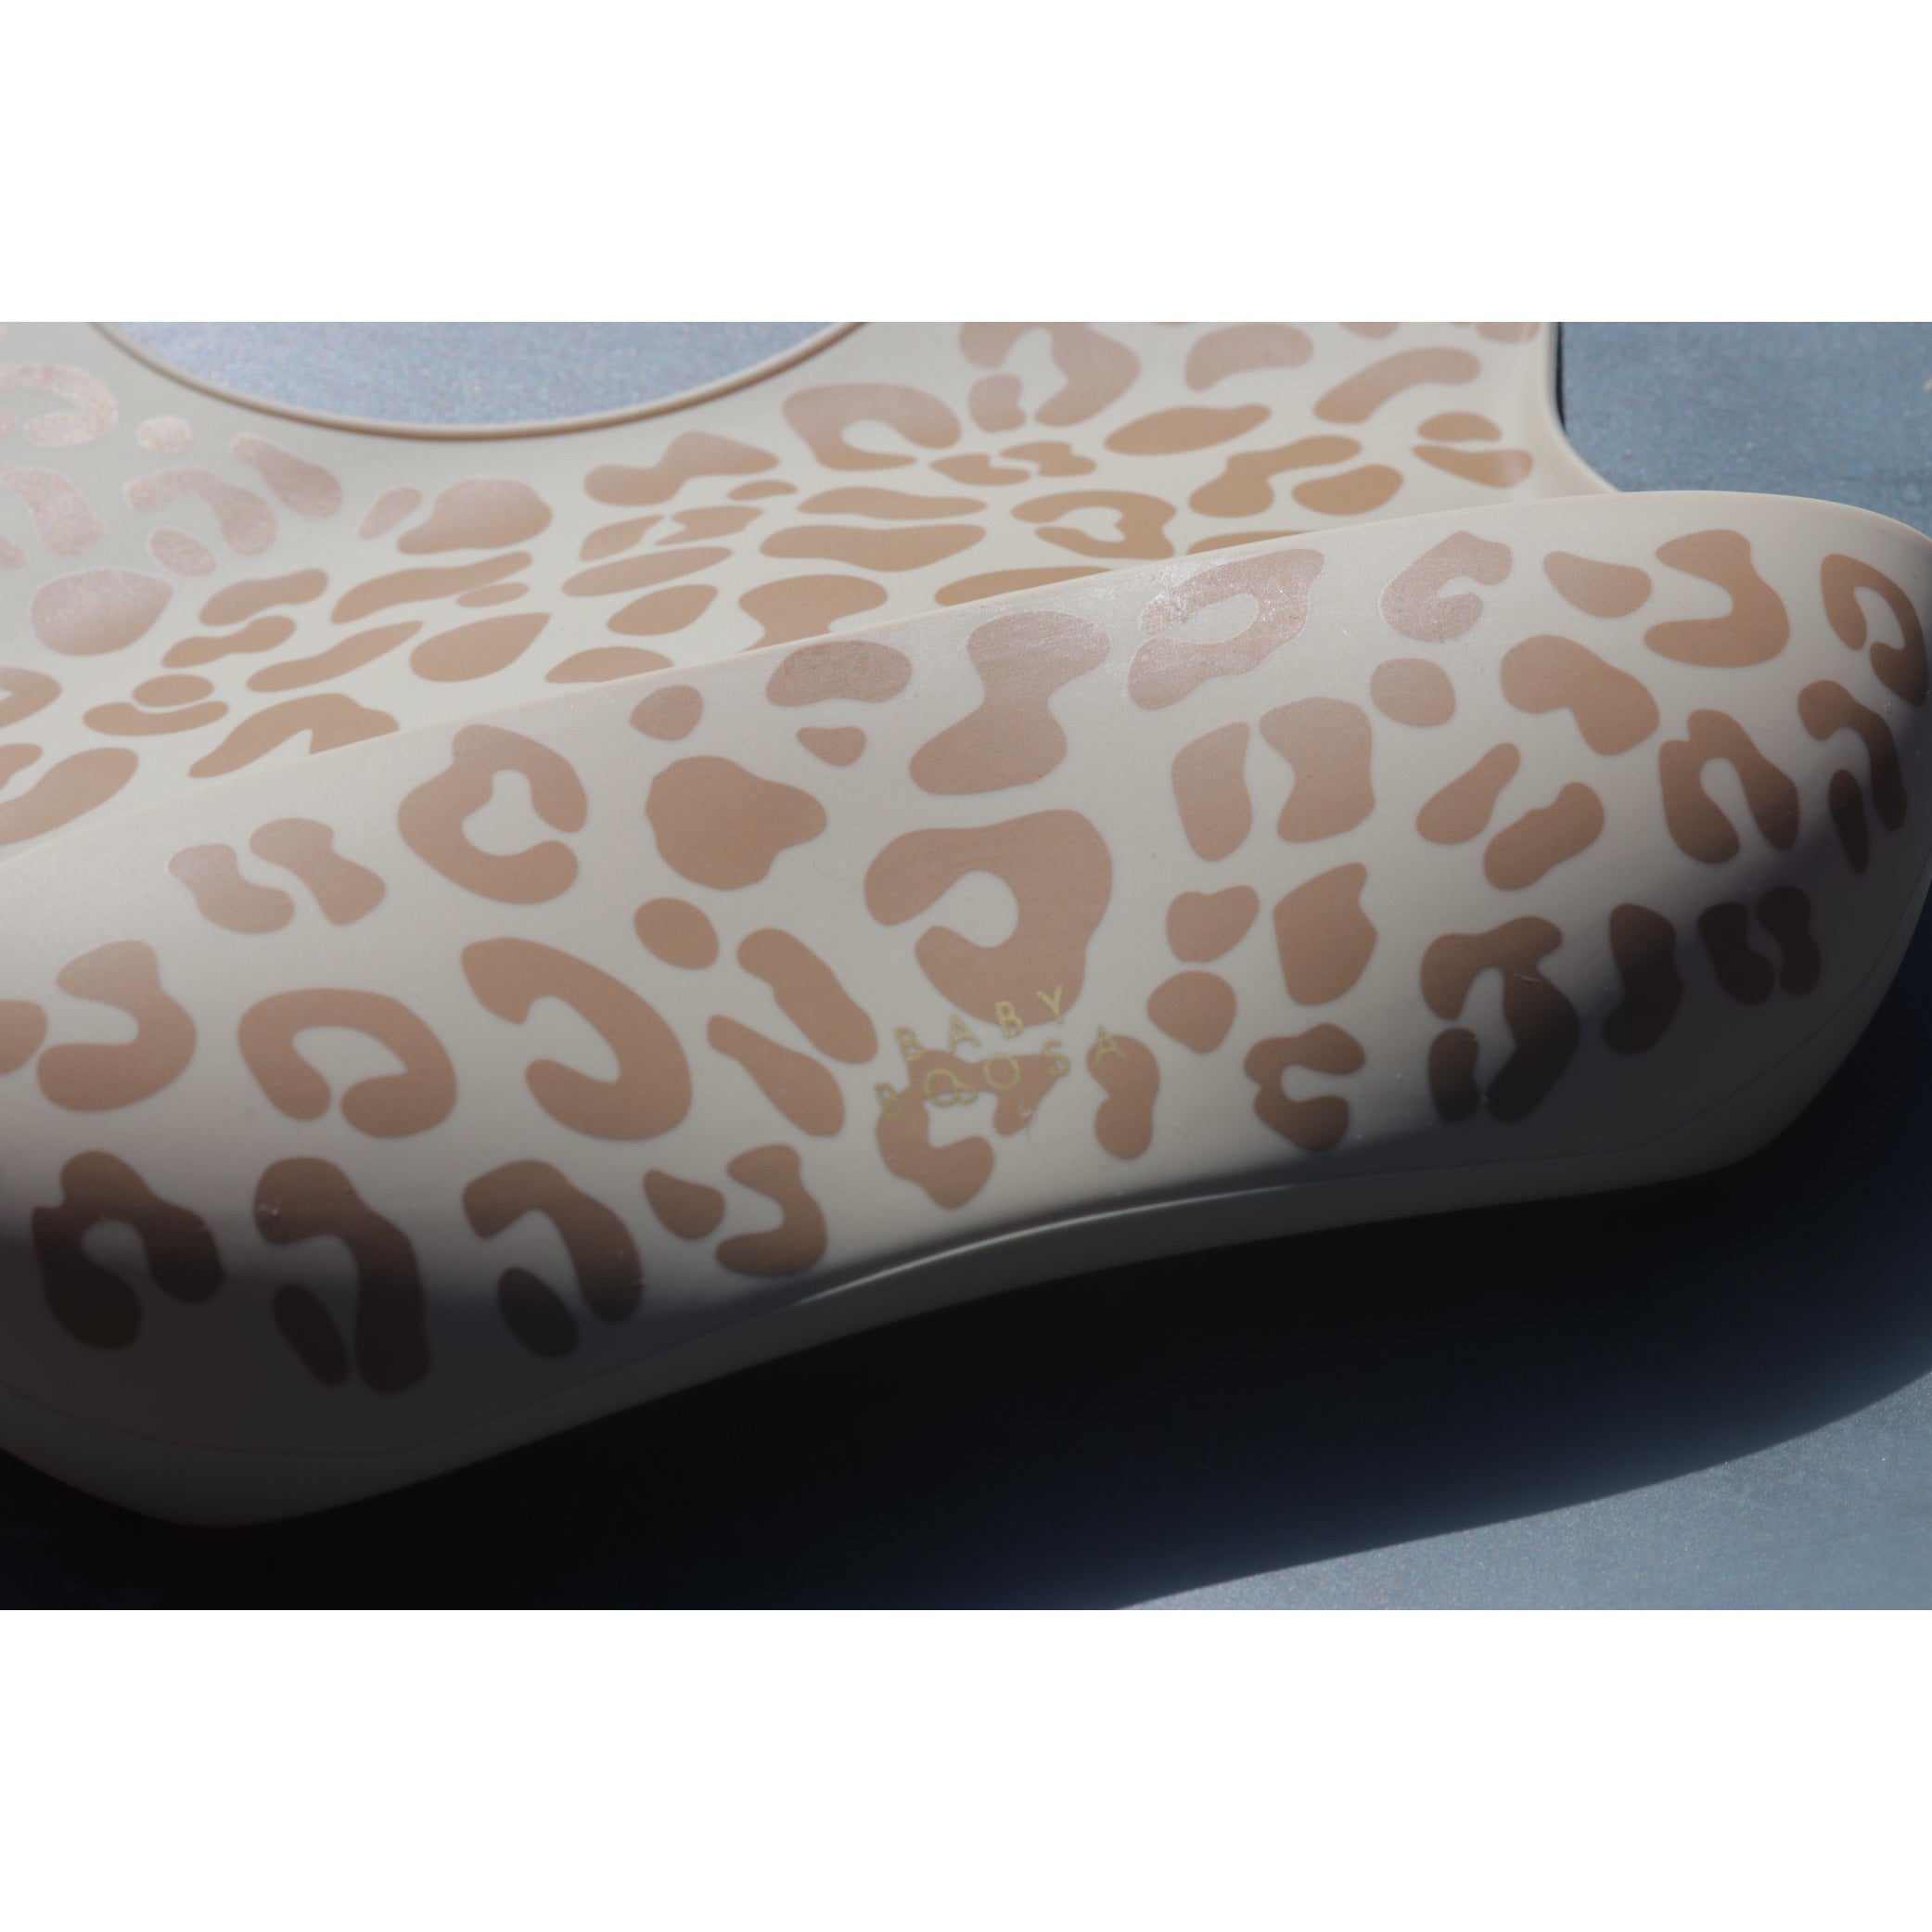 Comfort Bib | Adjustable-Fit | Easy Clean | No-Mess | No-Spill | Deep Catch (Leopard Print)